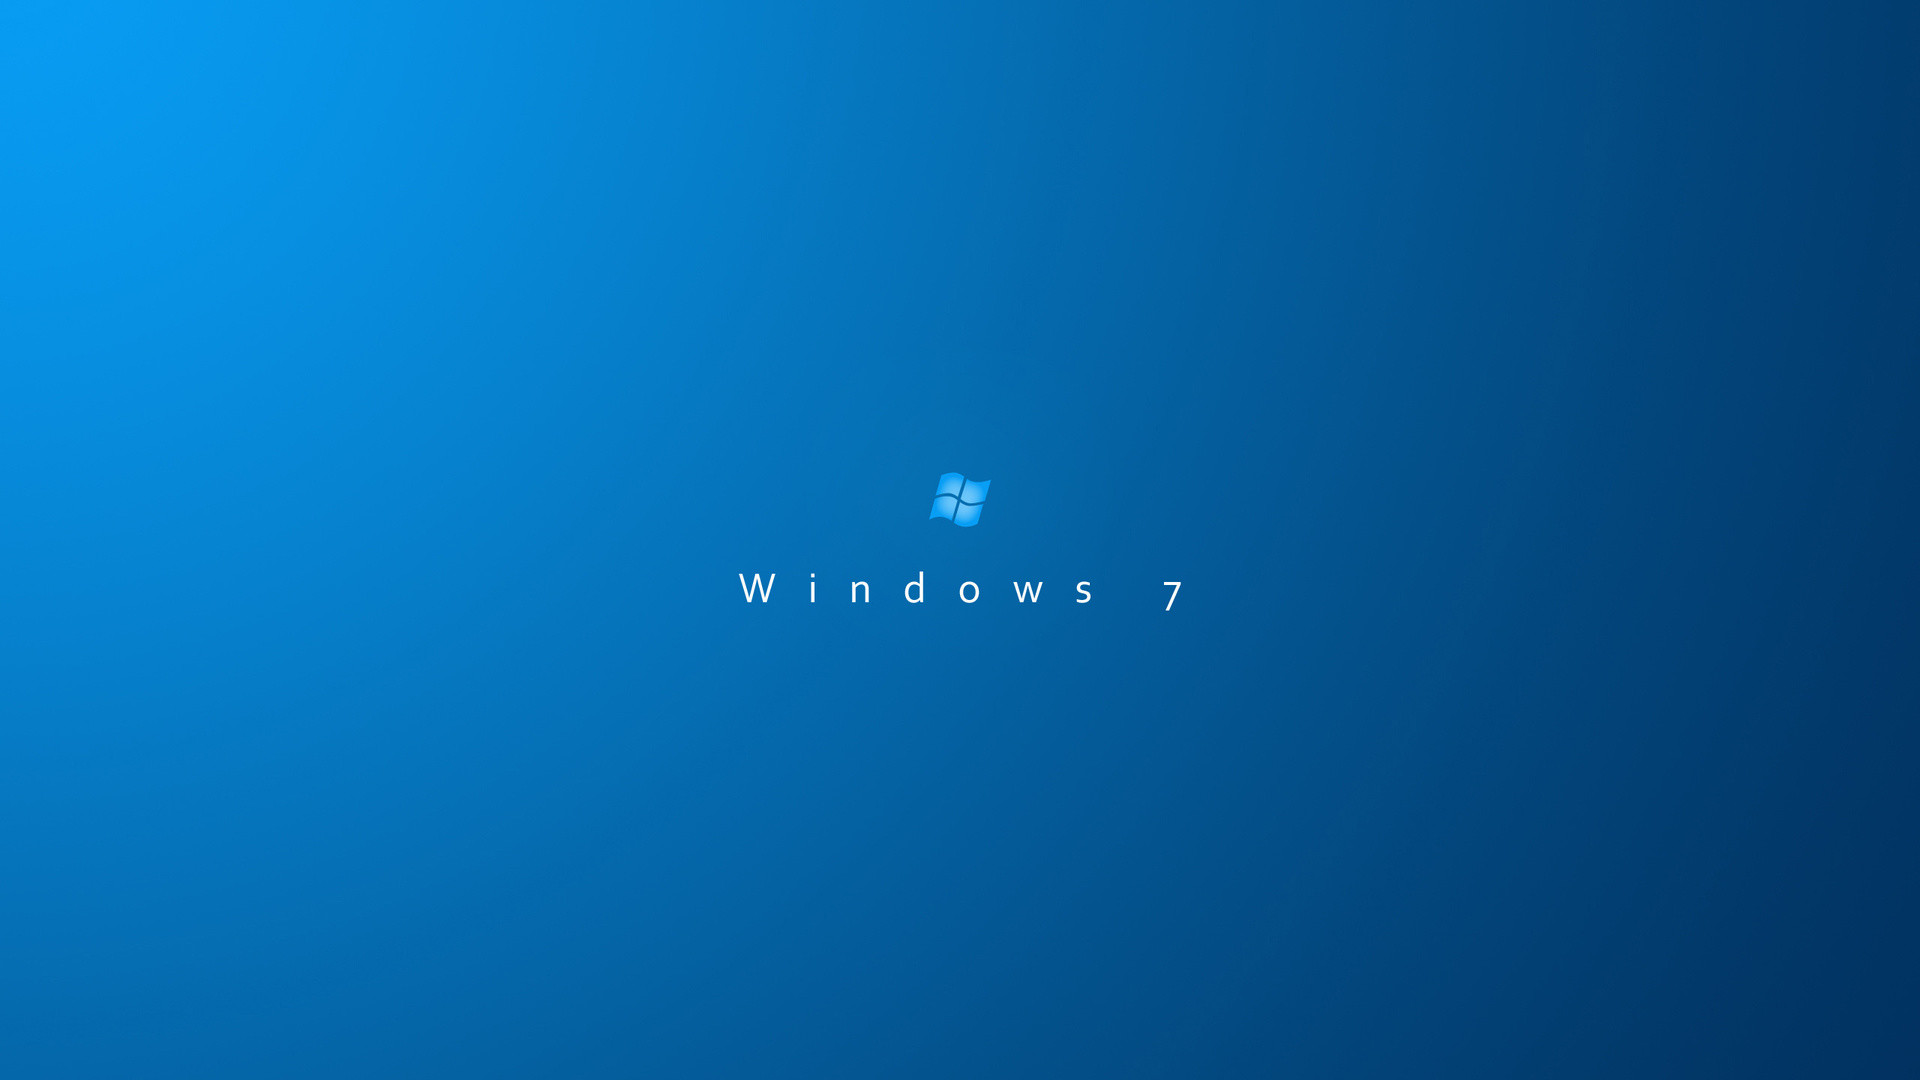 1920x1080 Minimalism, Windows 7, Blue Background, Hi Tech